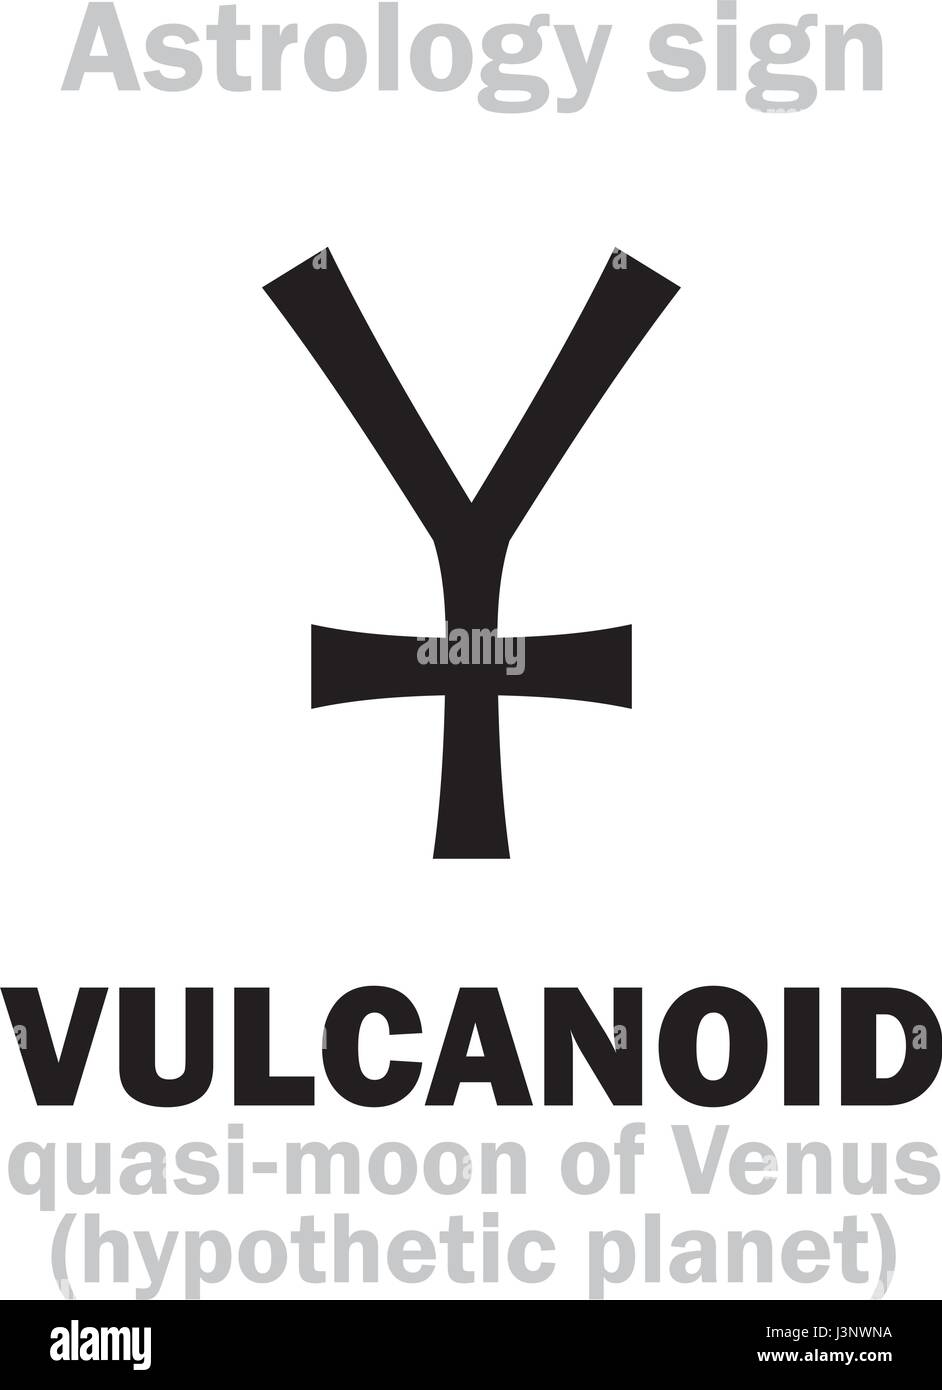 Astrology Alphabet: VULCANOID, quasi-moon of Venus (hypothetical planet-satellite). Hieroglyphics character sign (single symbol). Stock Vector